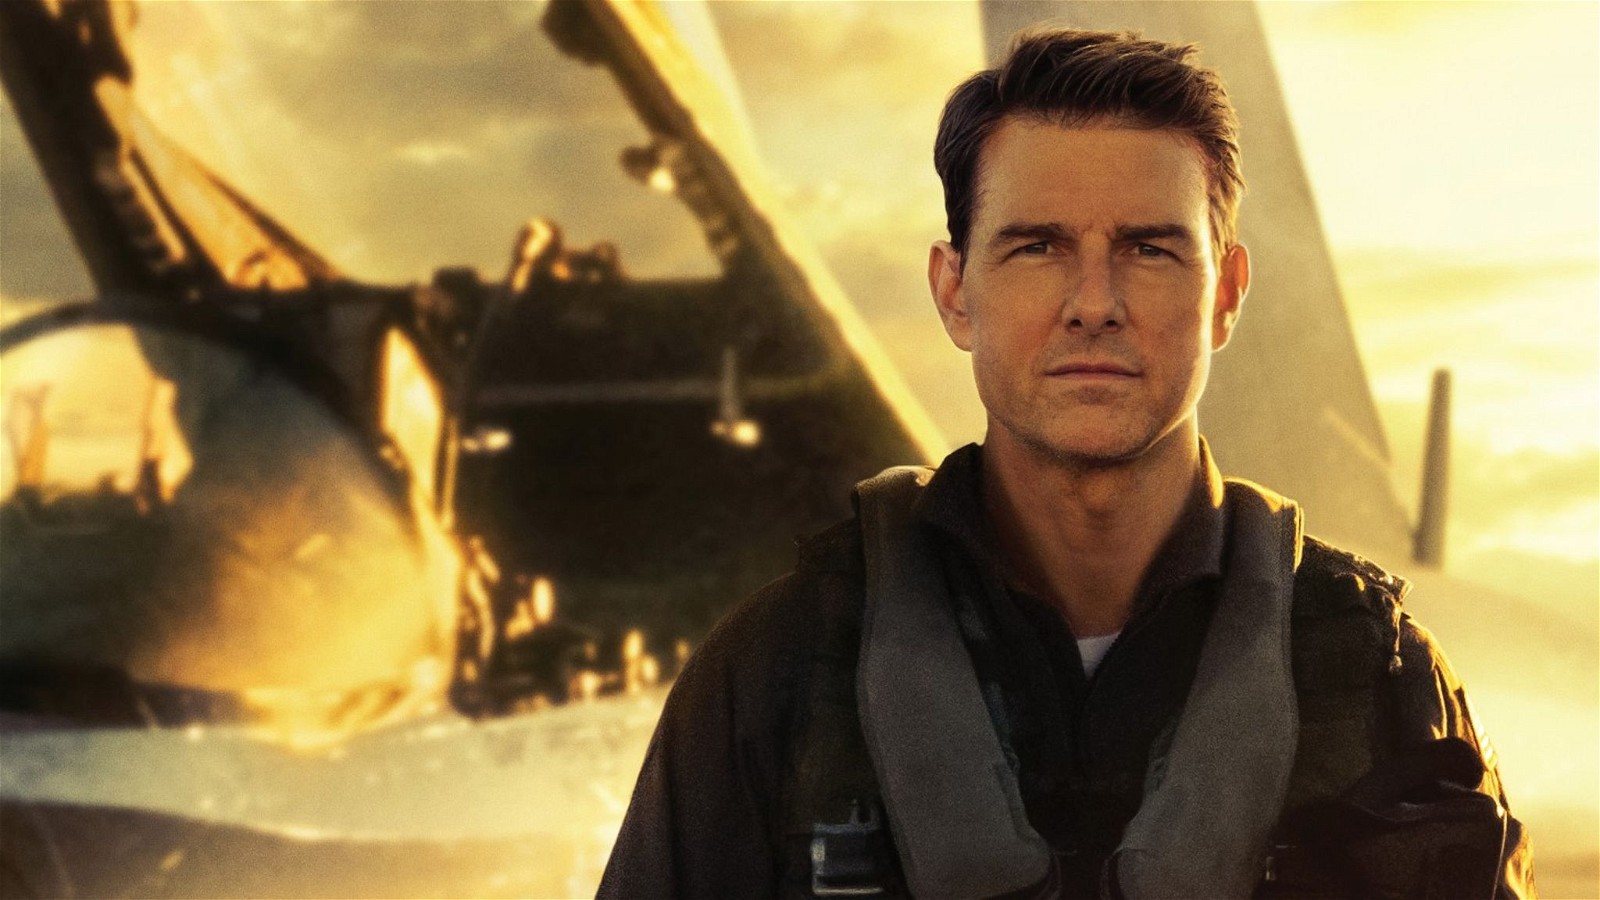 Tom Cruise in Top Gun- Maverick